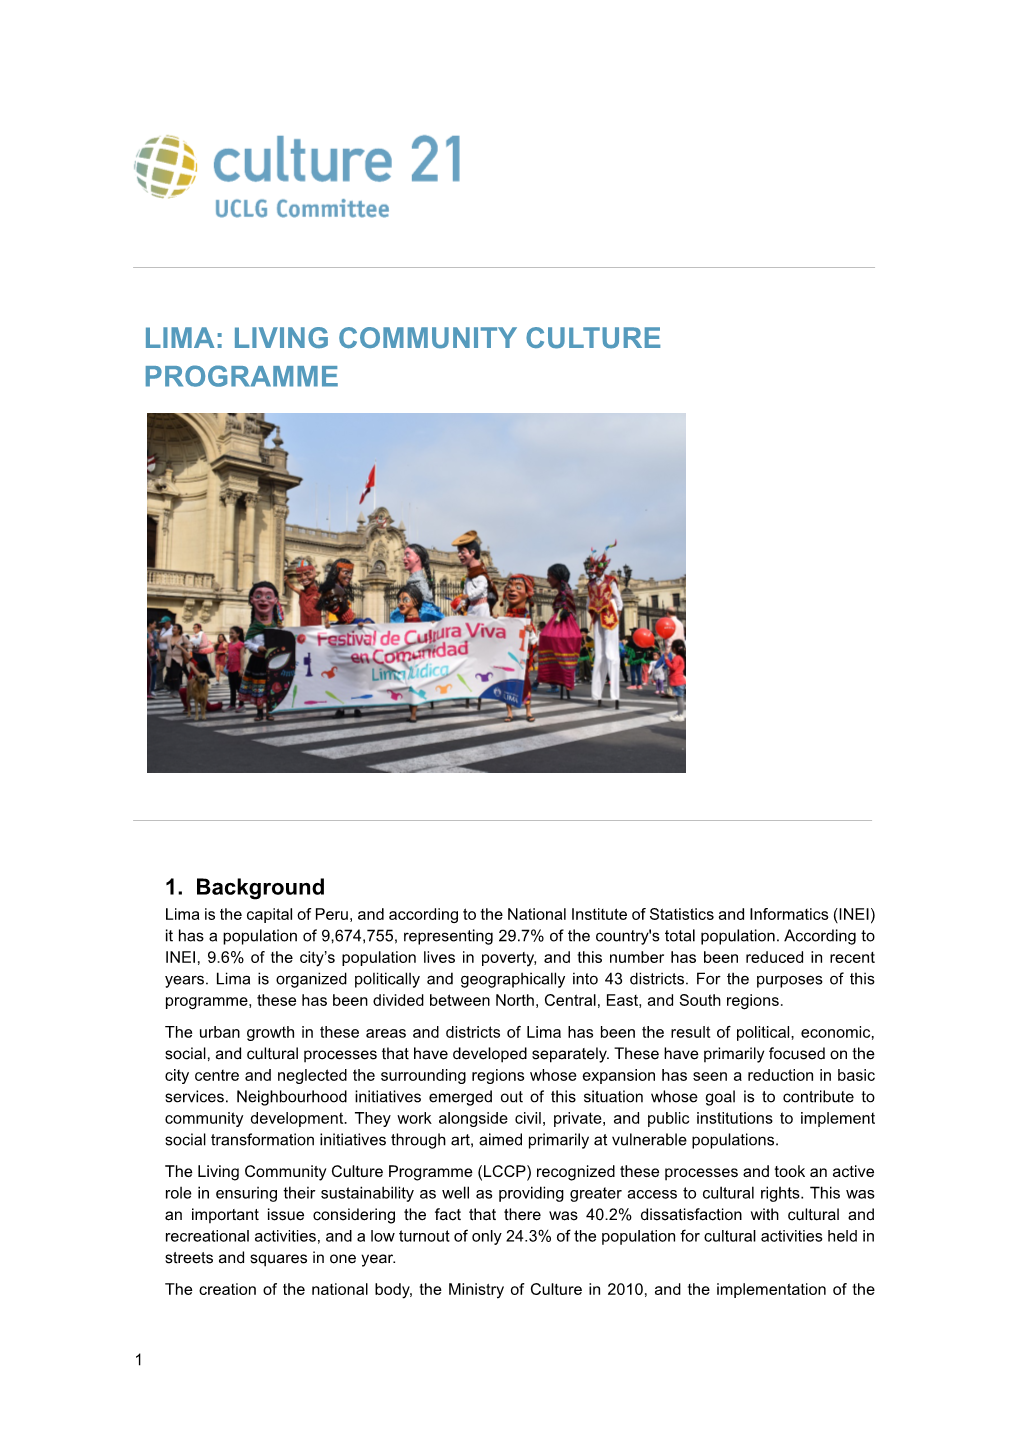 Lima: Living Community Culture Programme